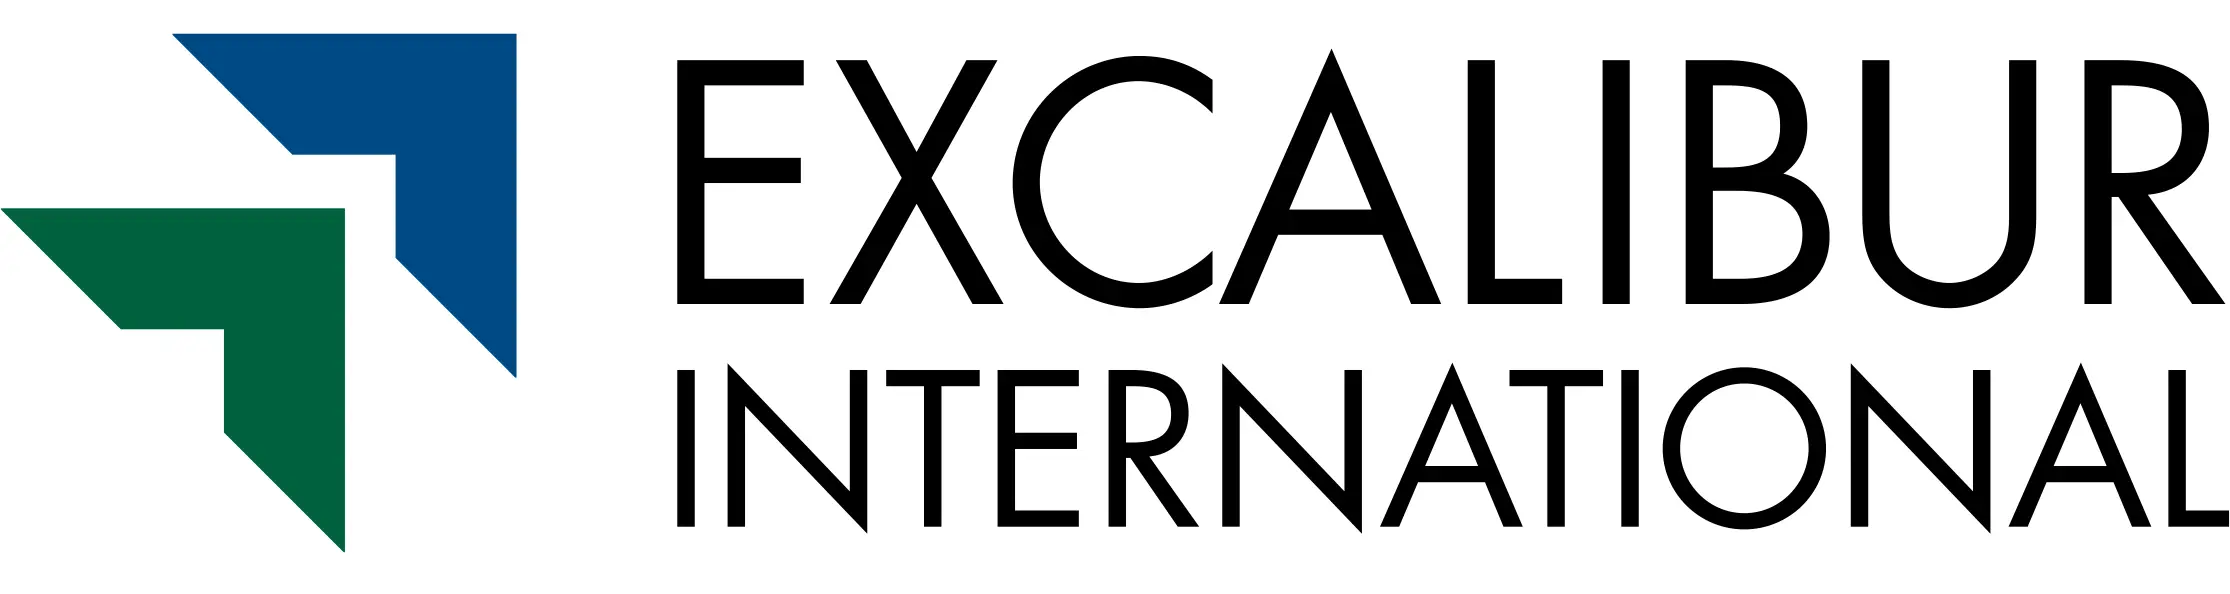 Excalibur International